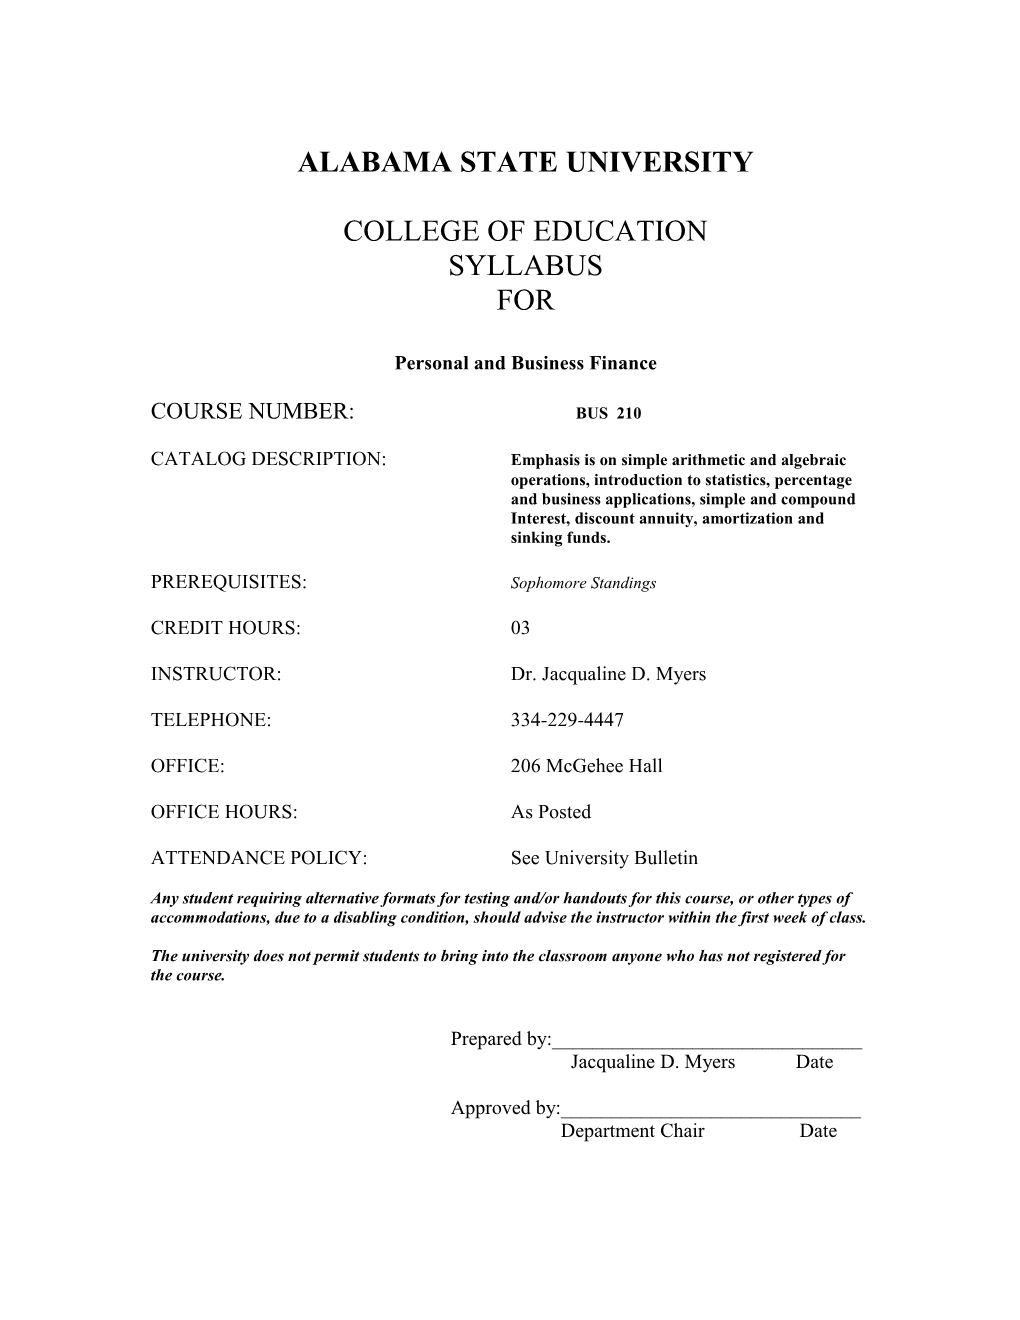 Alabama State University s2